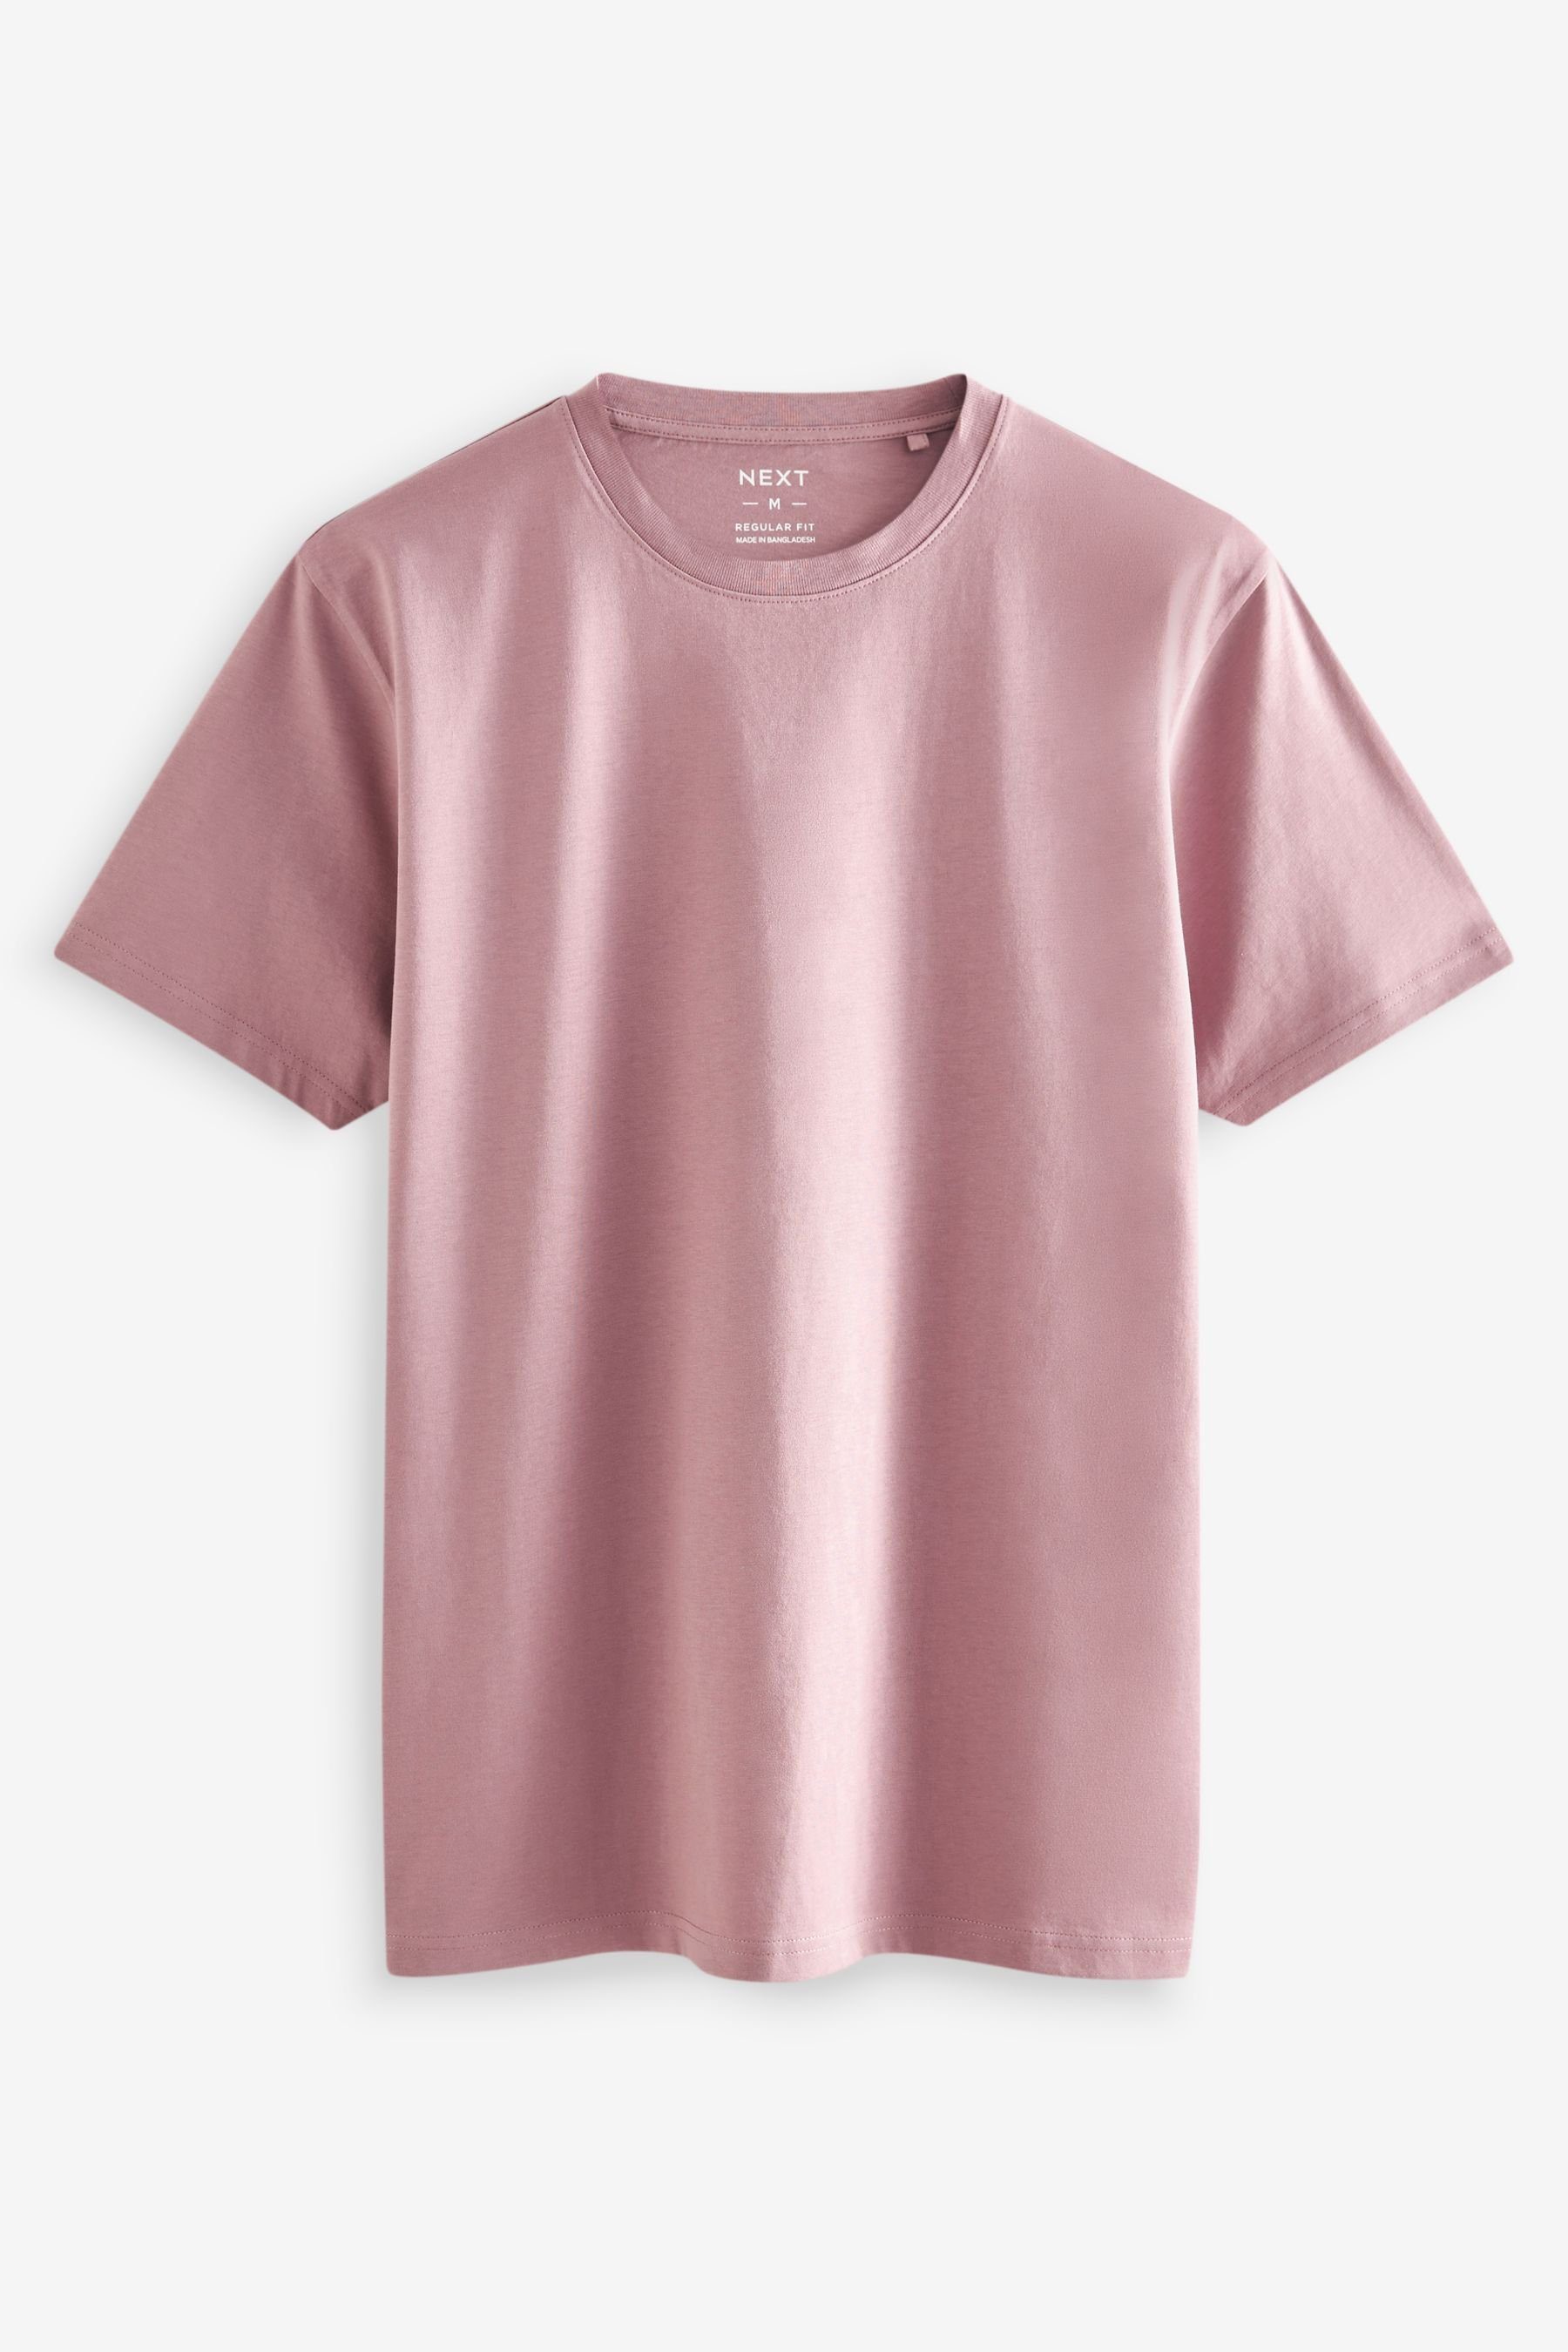 6er-Pack Grey/Black/Blue/Light Next Blue/White/Pink T-Shirt (6-tlg) T-Shirts